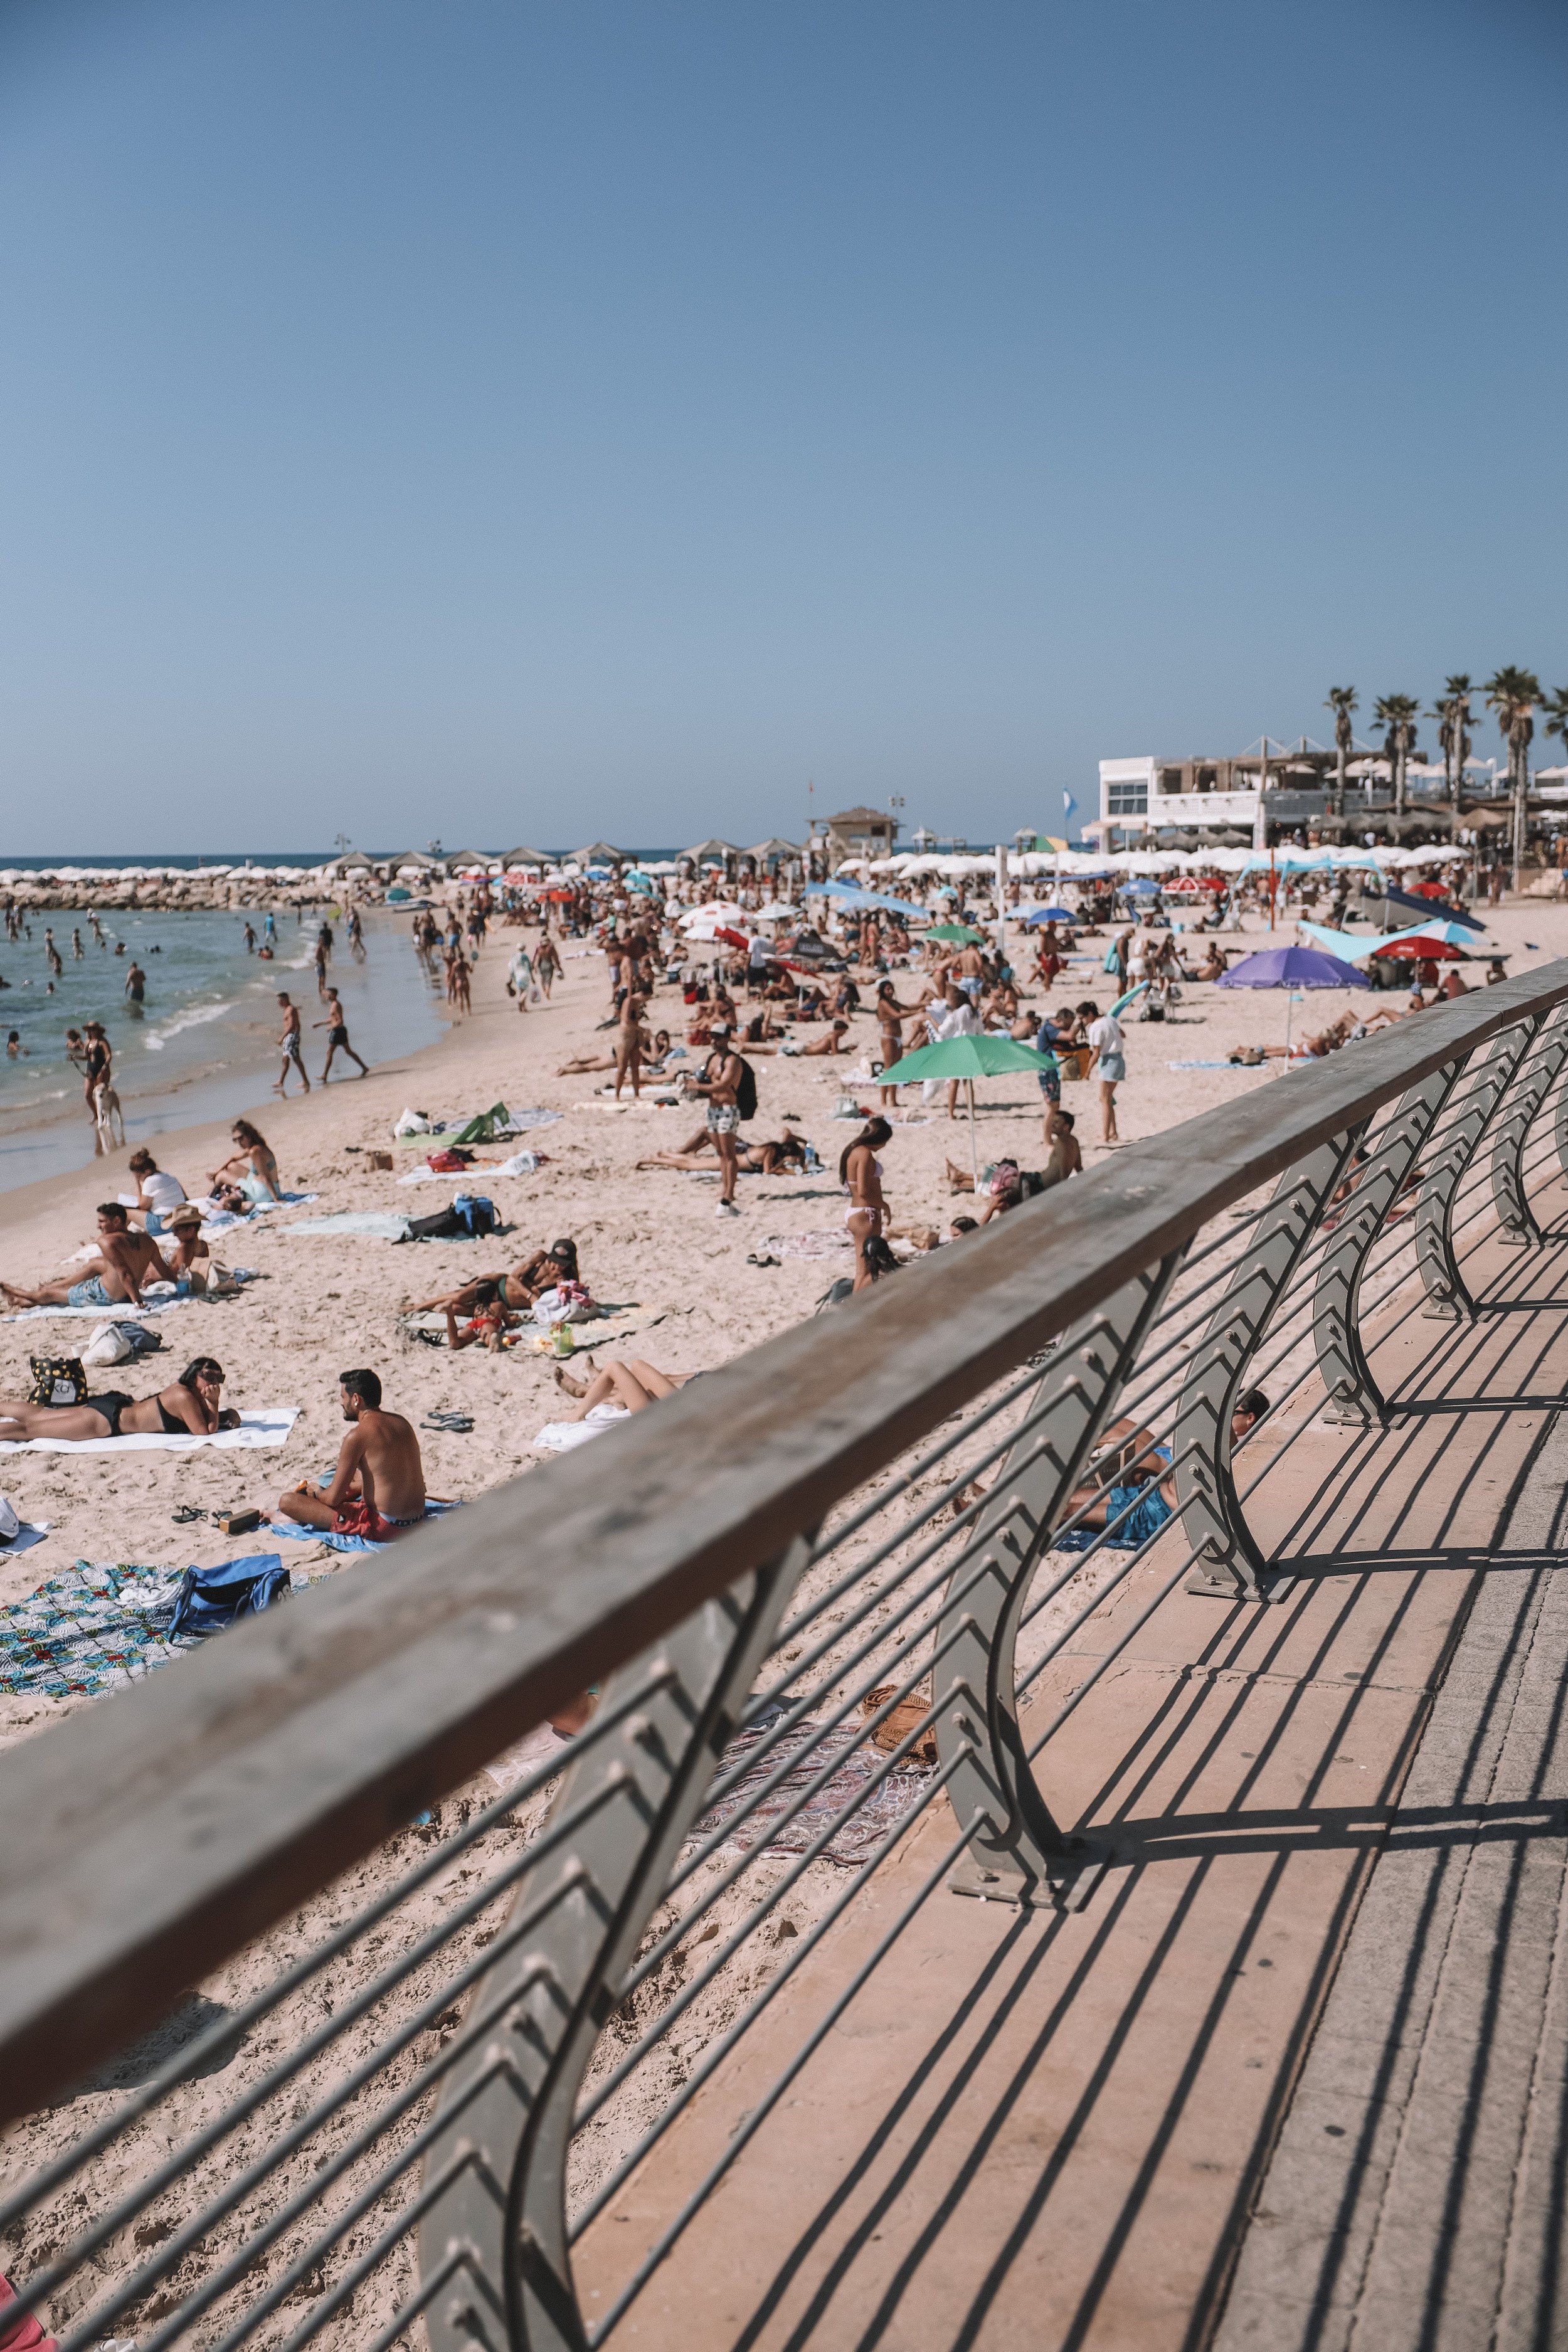 The promenade / boardwalk - Tel Aviv - Israel